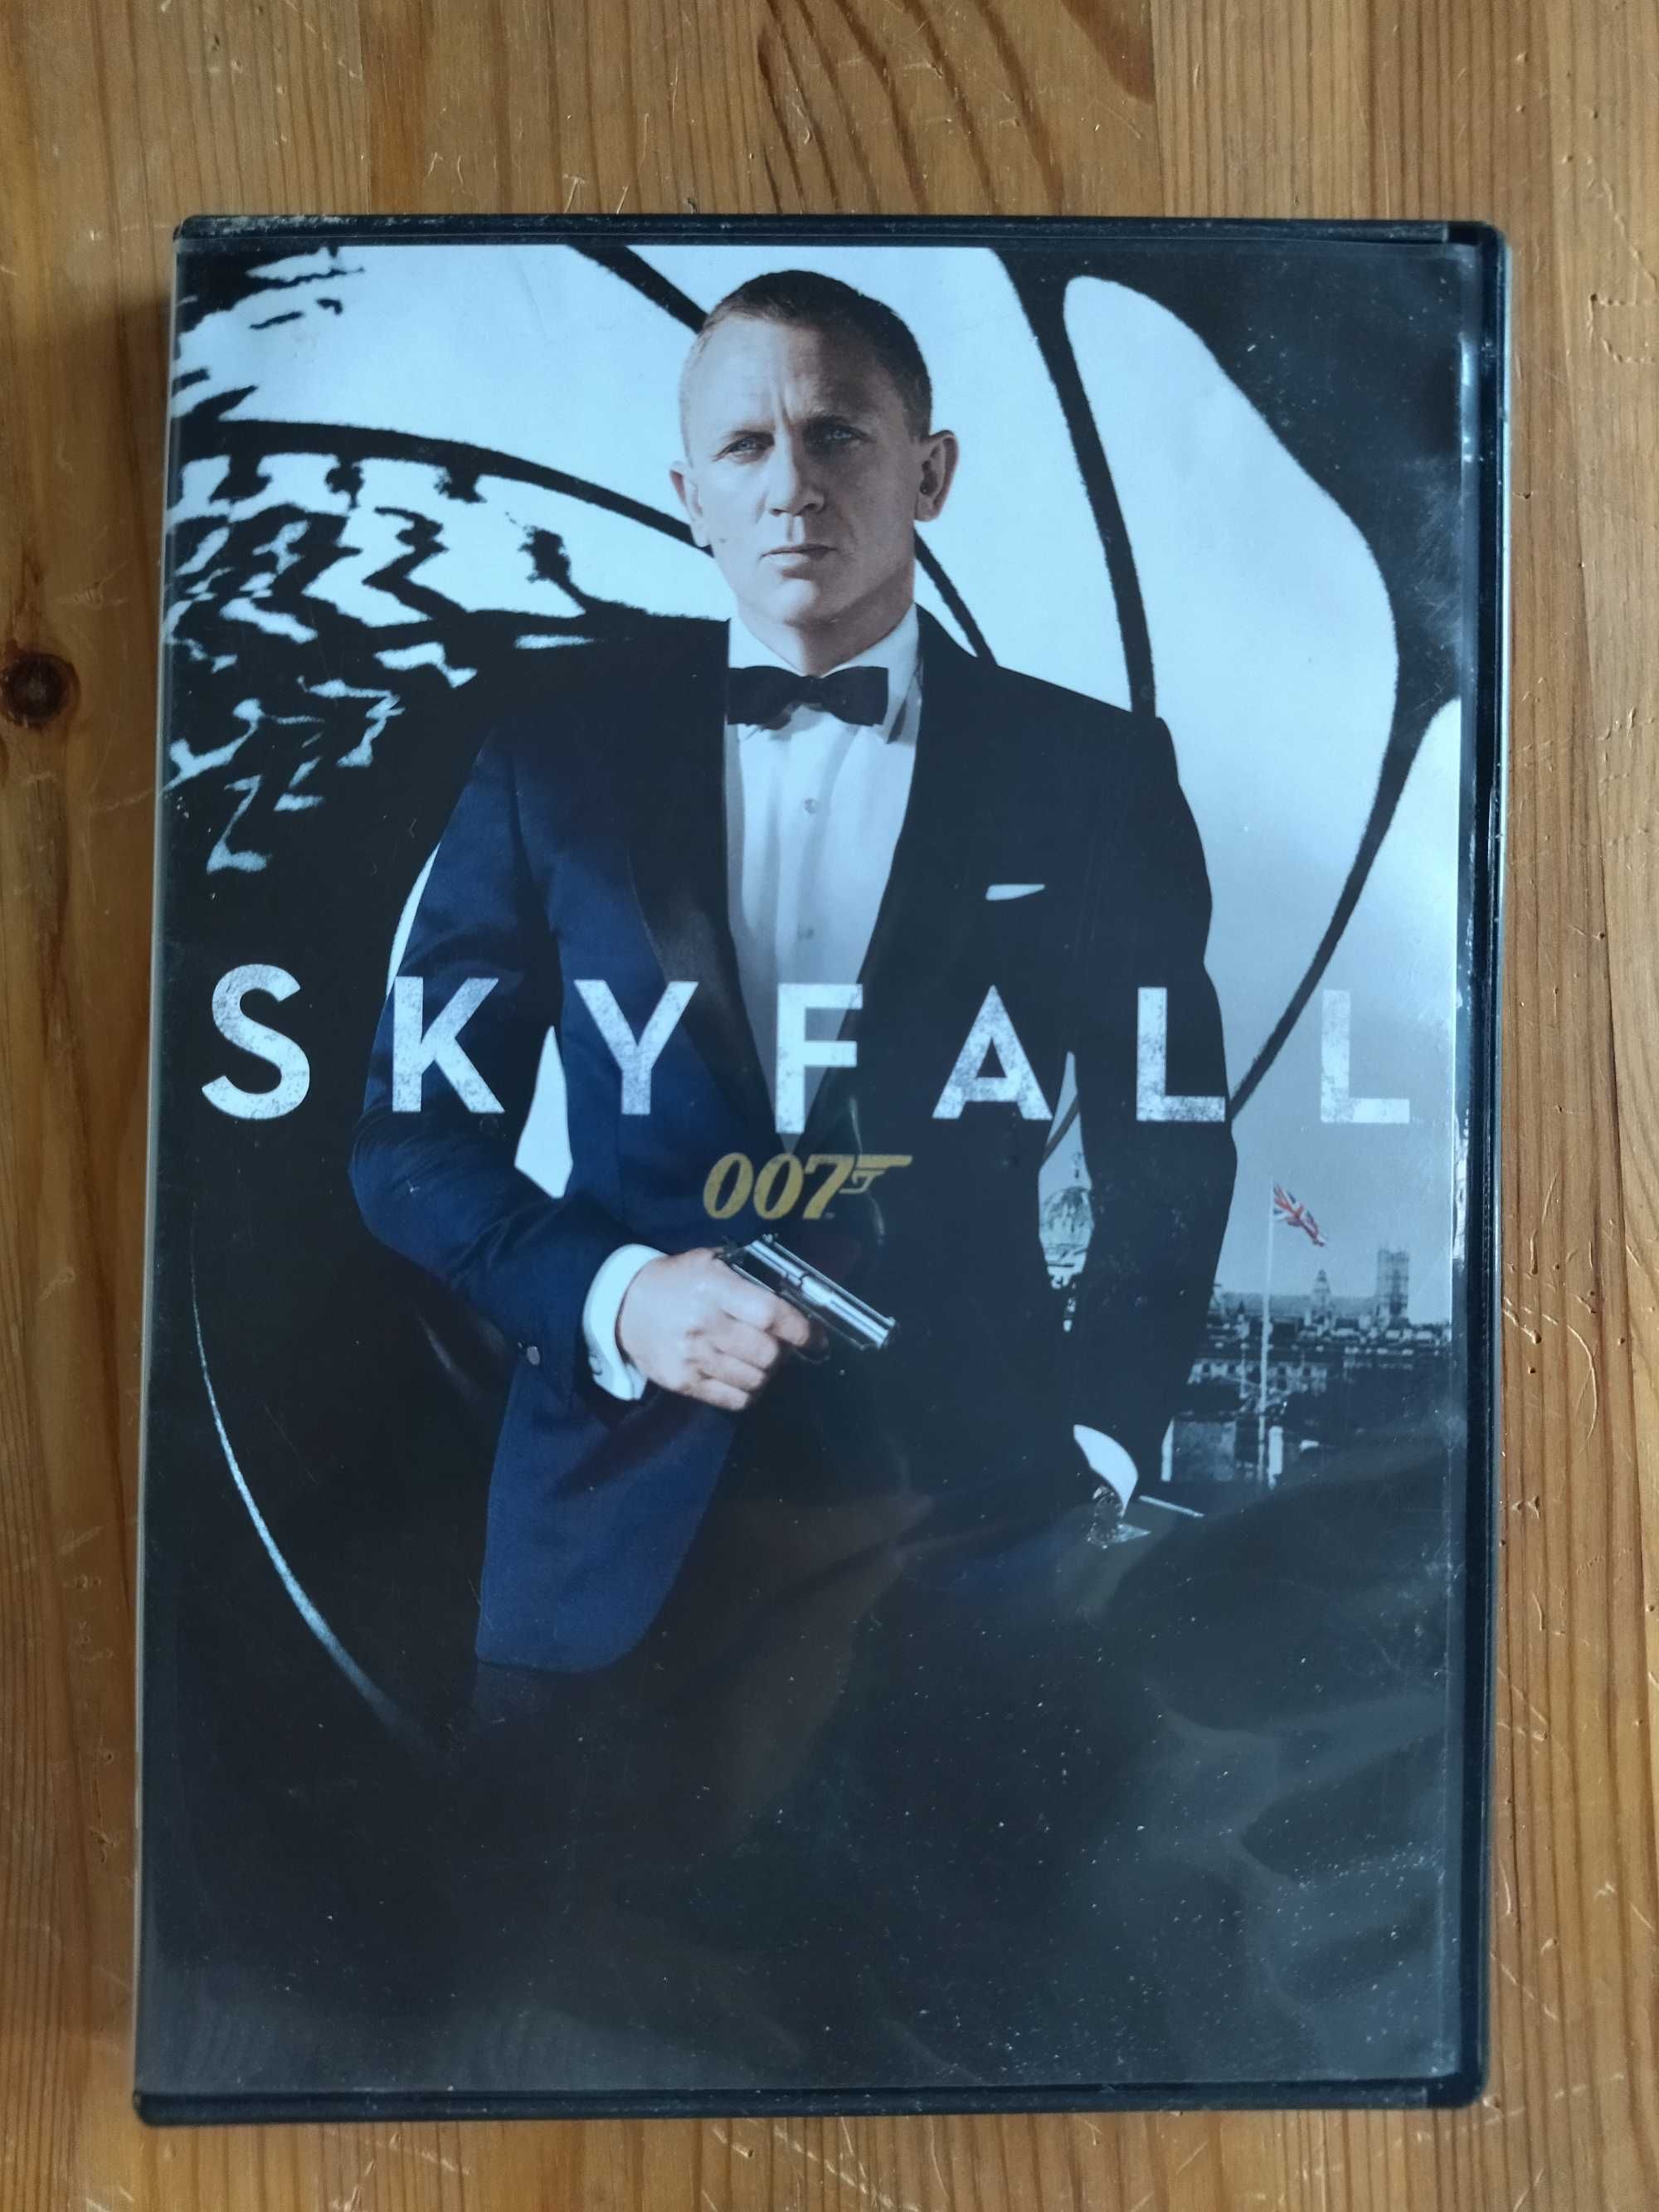 Skyfall 007 James Bond DVD film